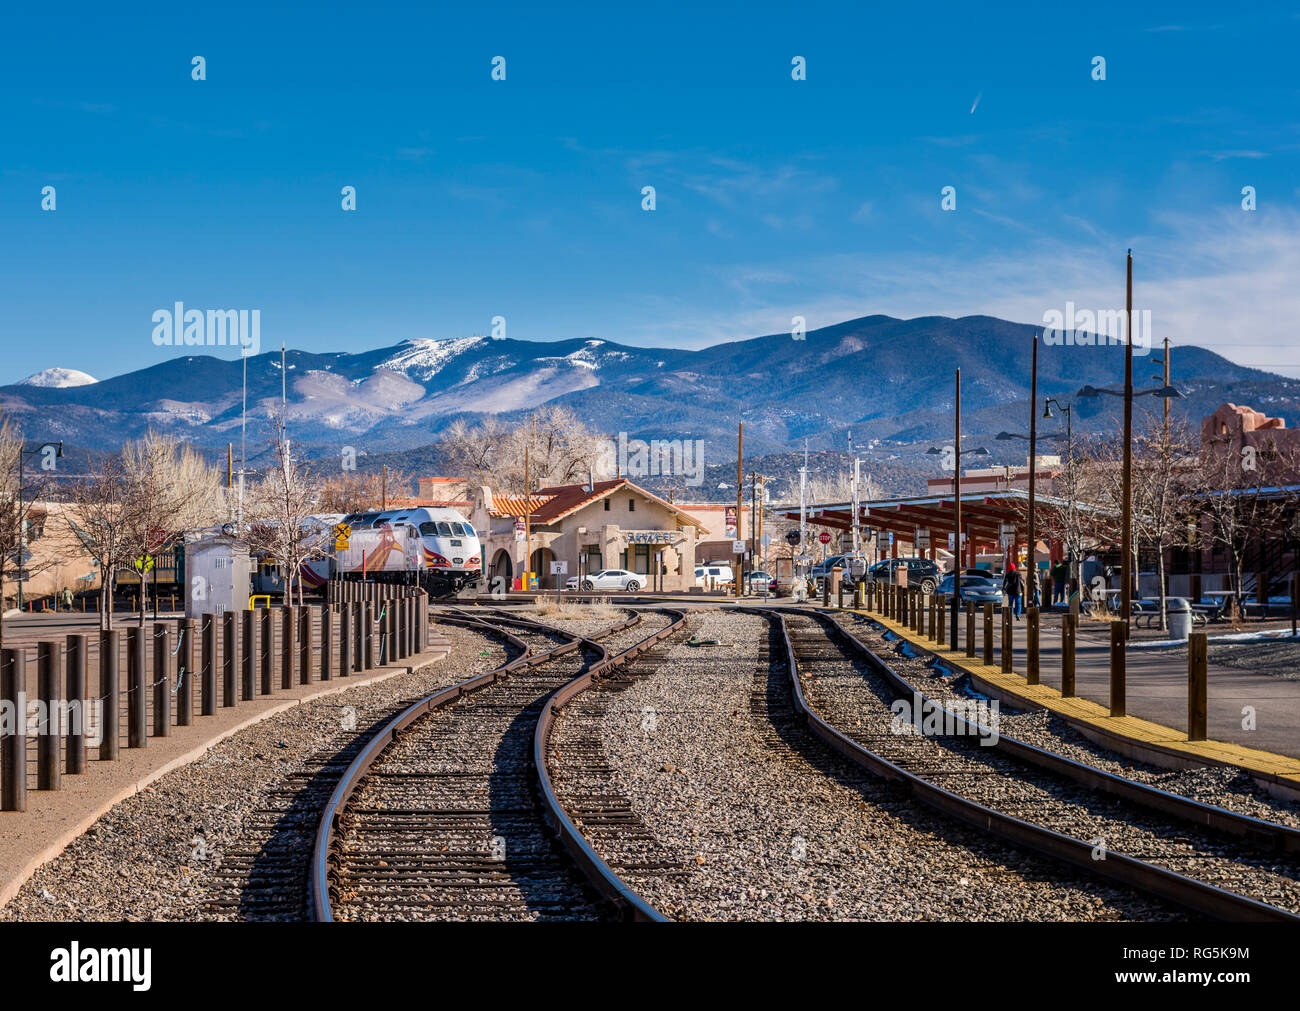 Santa Fe train depot, rail runner train, railroad tracks and Sangre de Cristo Mountains with snow in Santa Fe, New Mexico Railyard. Stock Photo